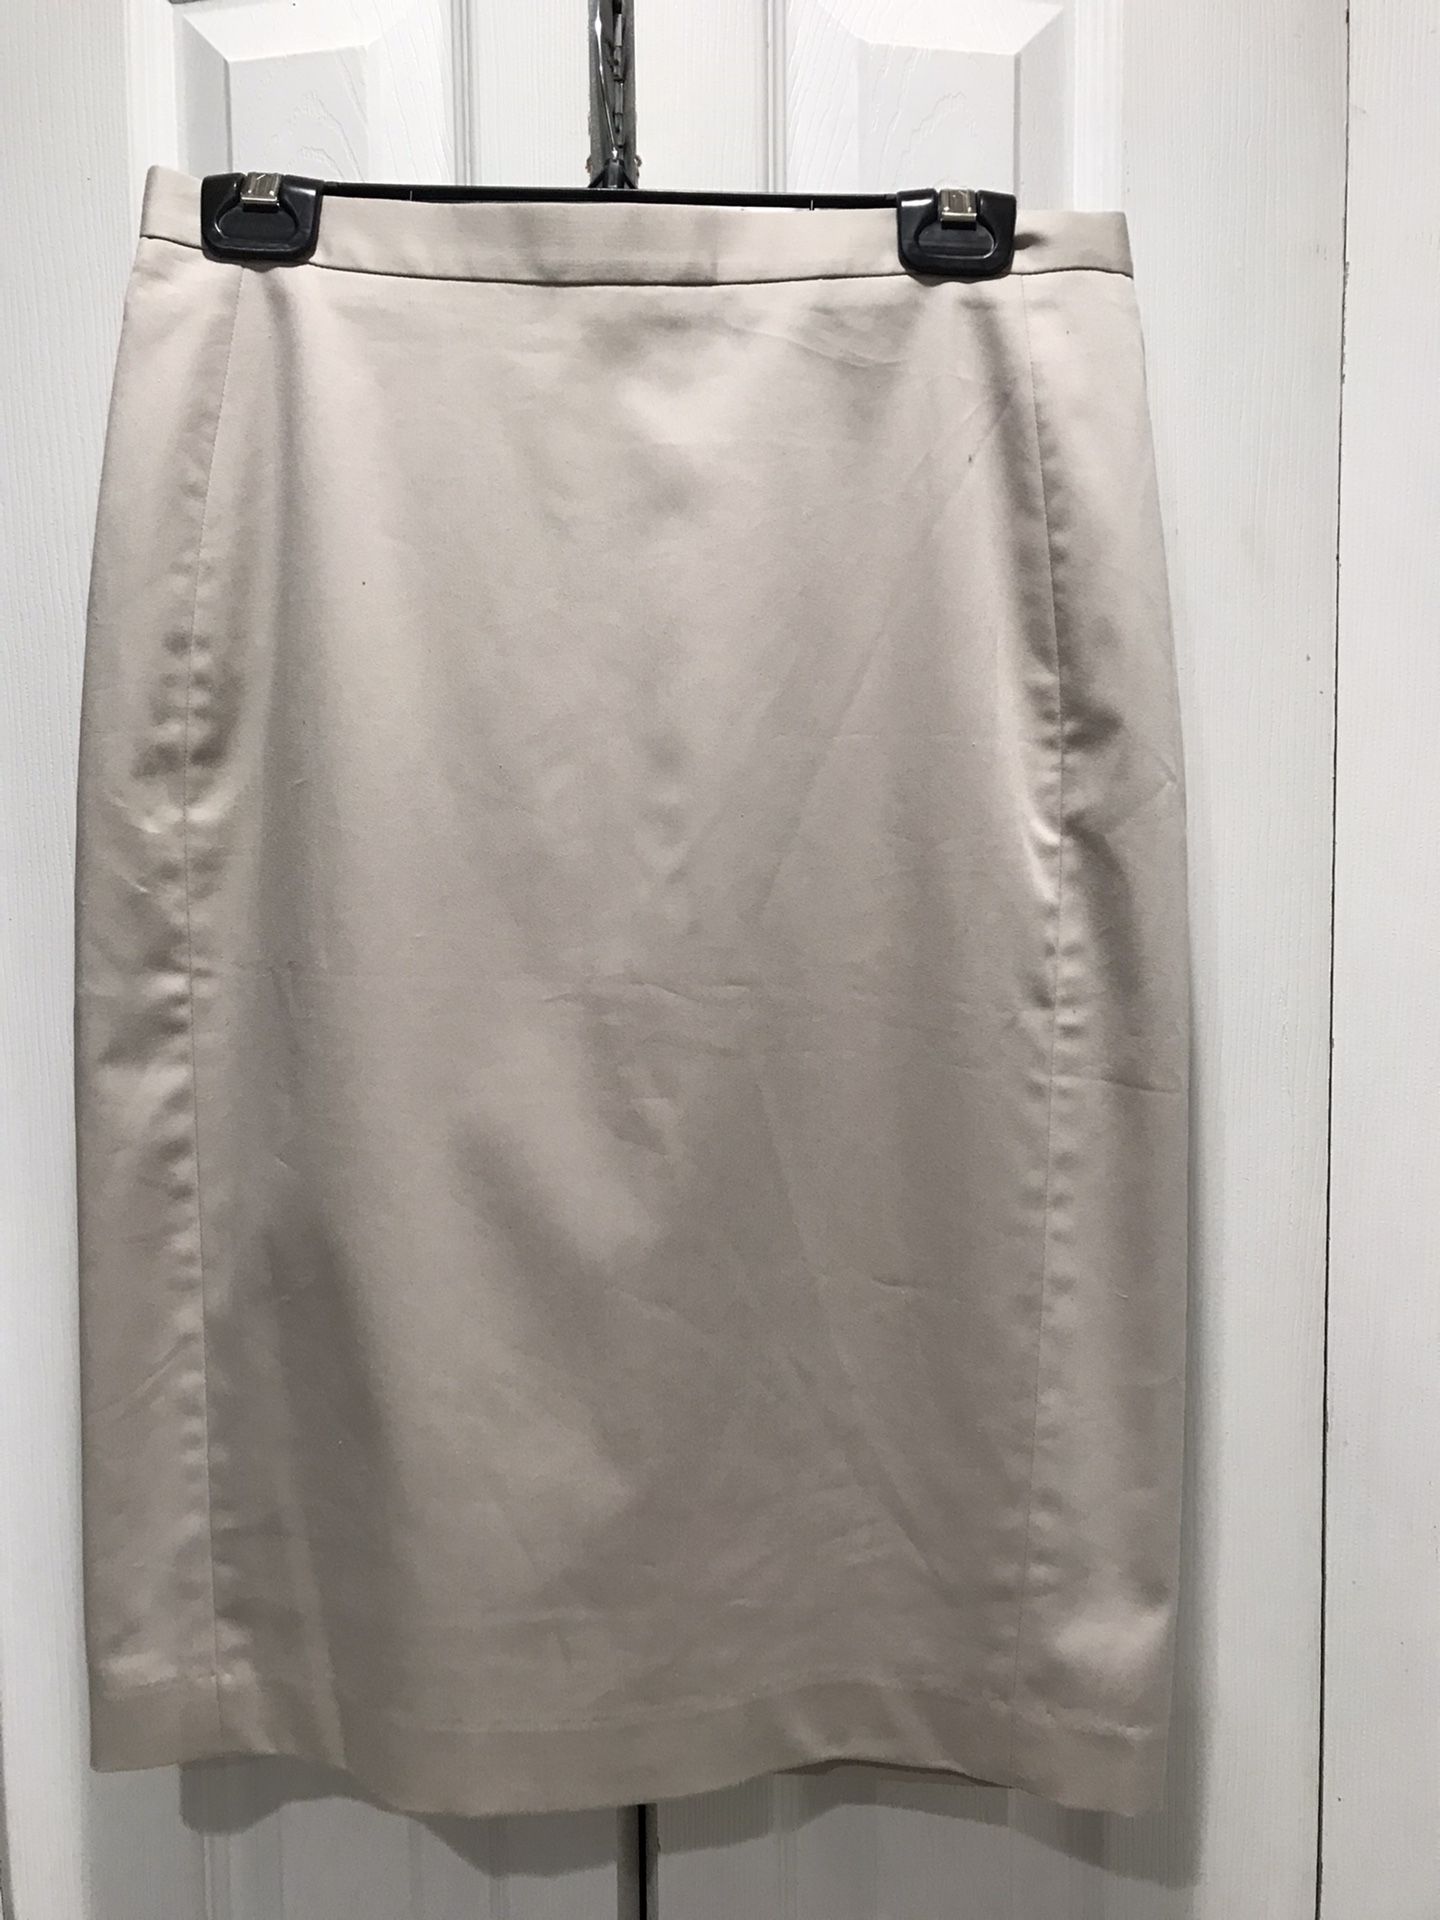 NWT Ann Taylor Lined Cotton Blend Light Beige/Gray Color Pencil Skirt, Size 6P